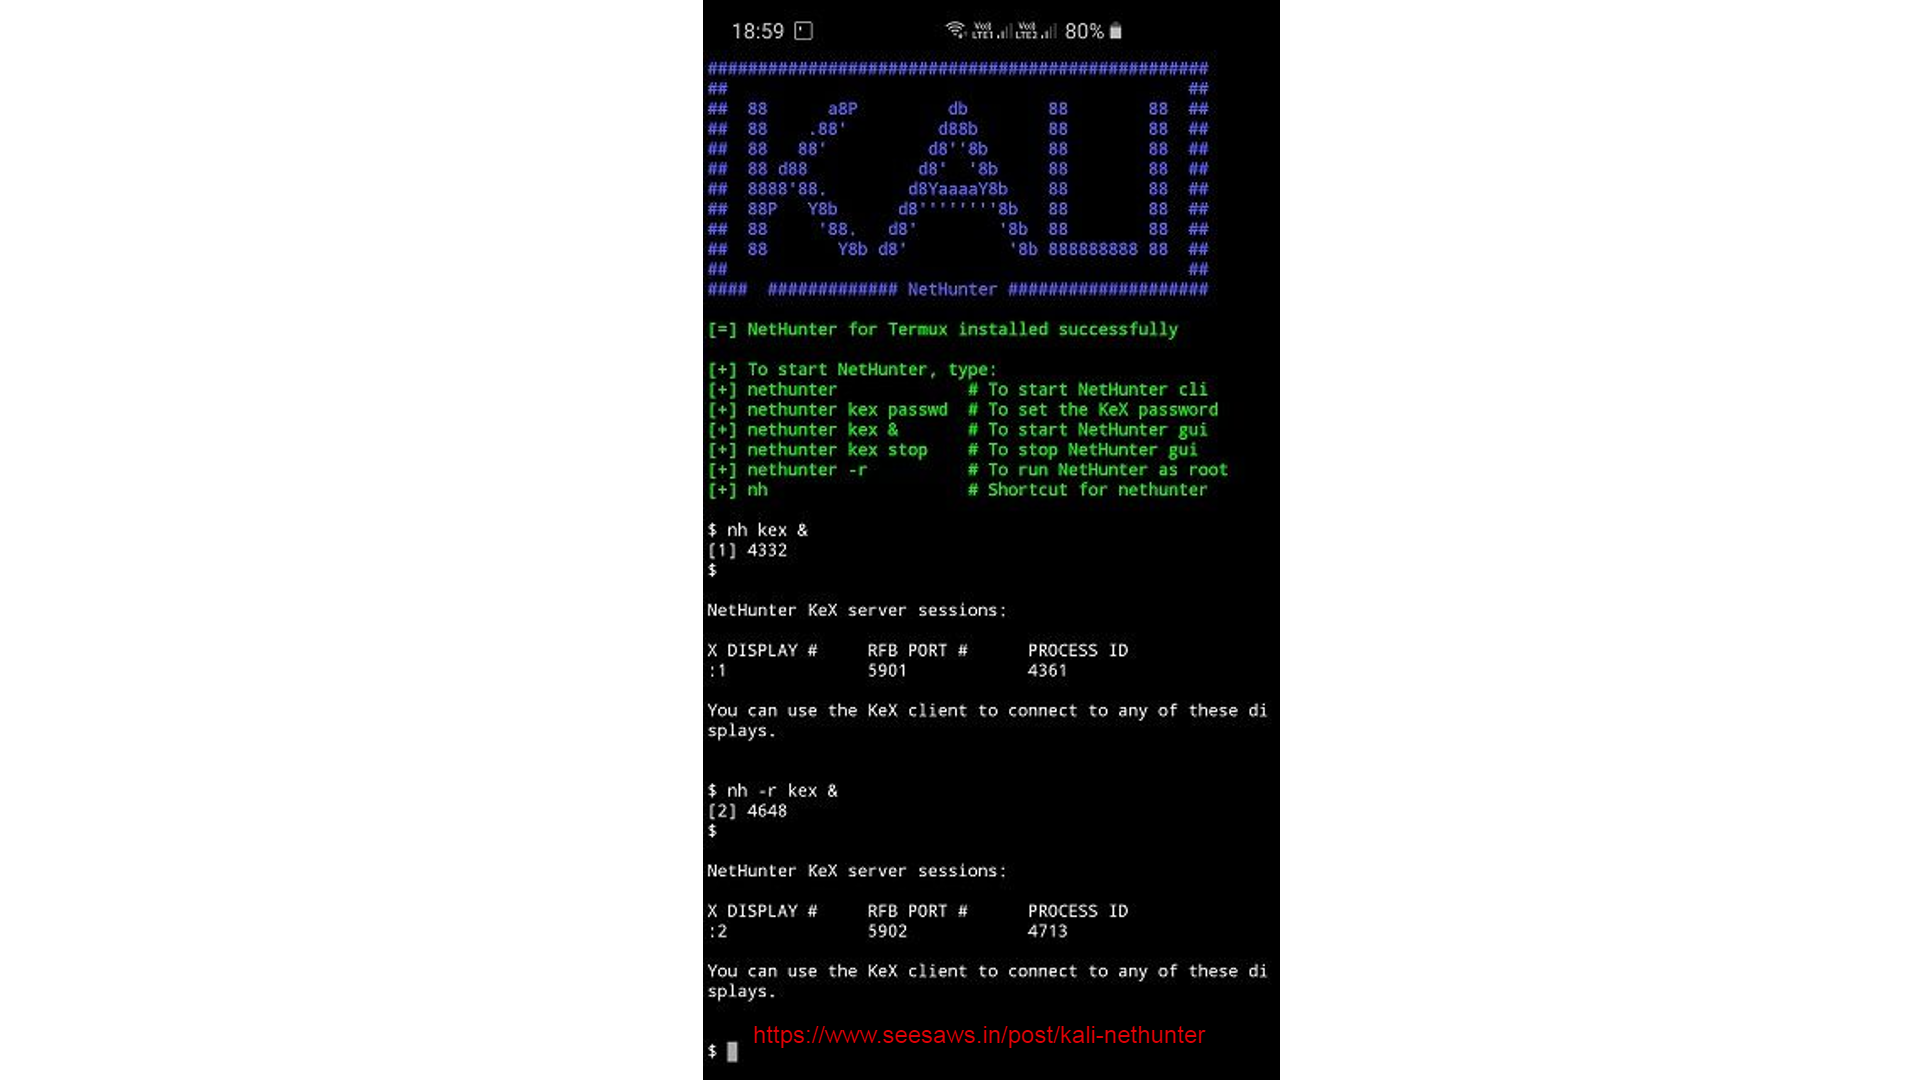 Kali Linux boot screen